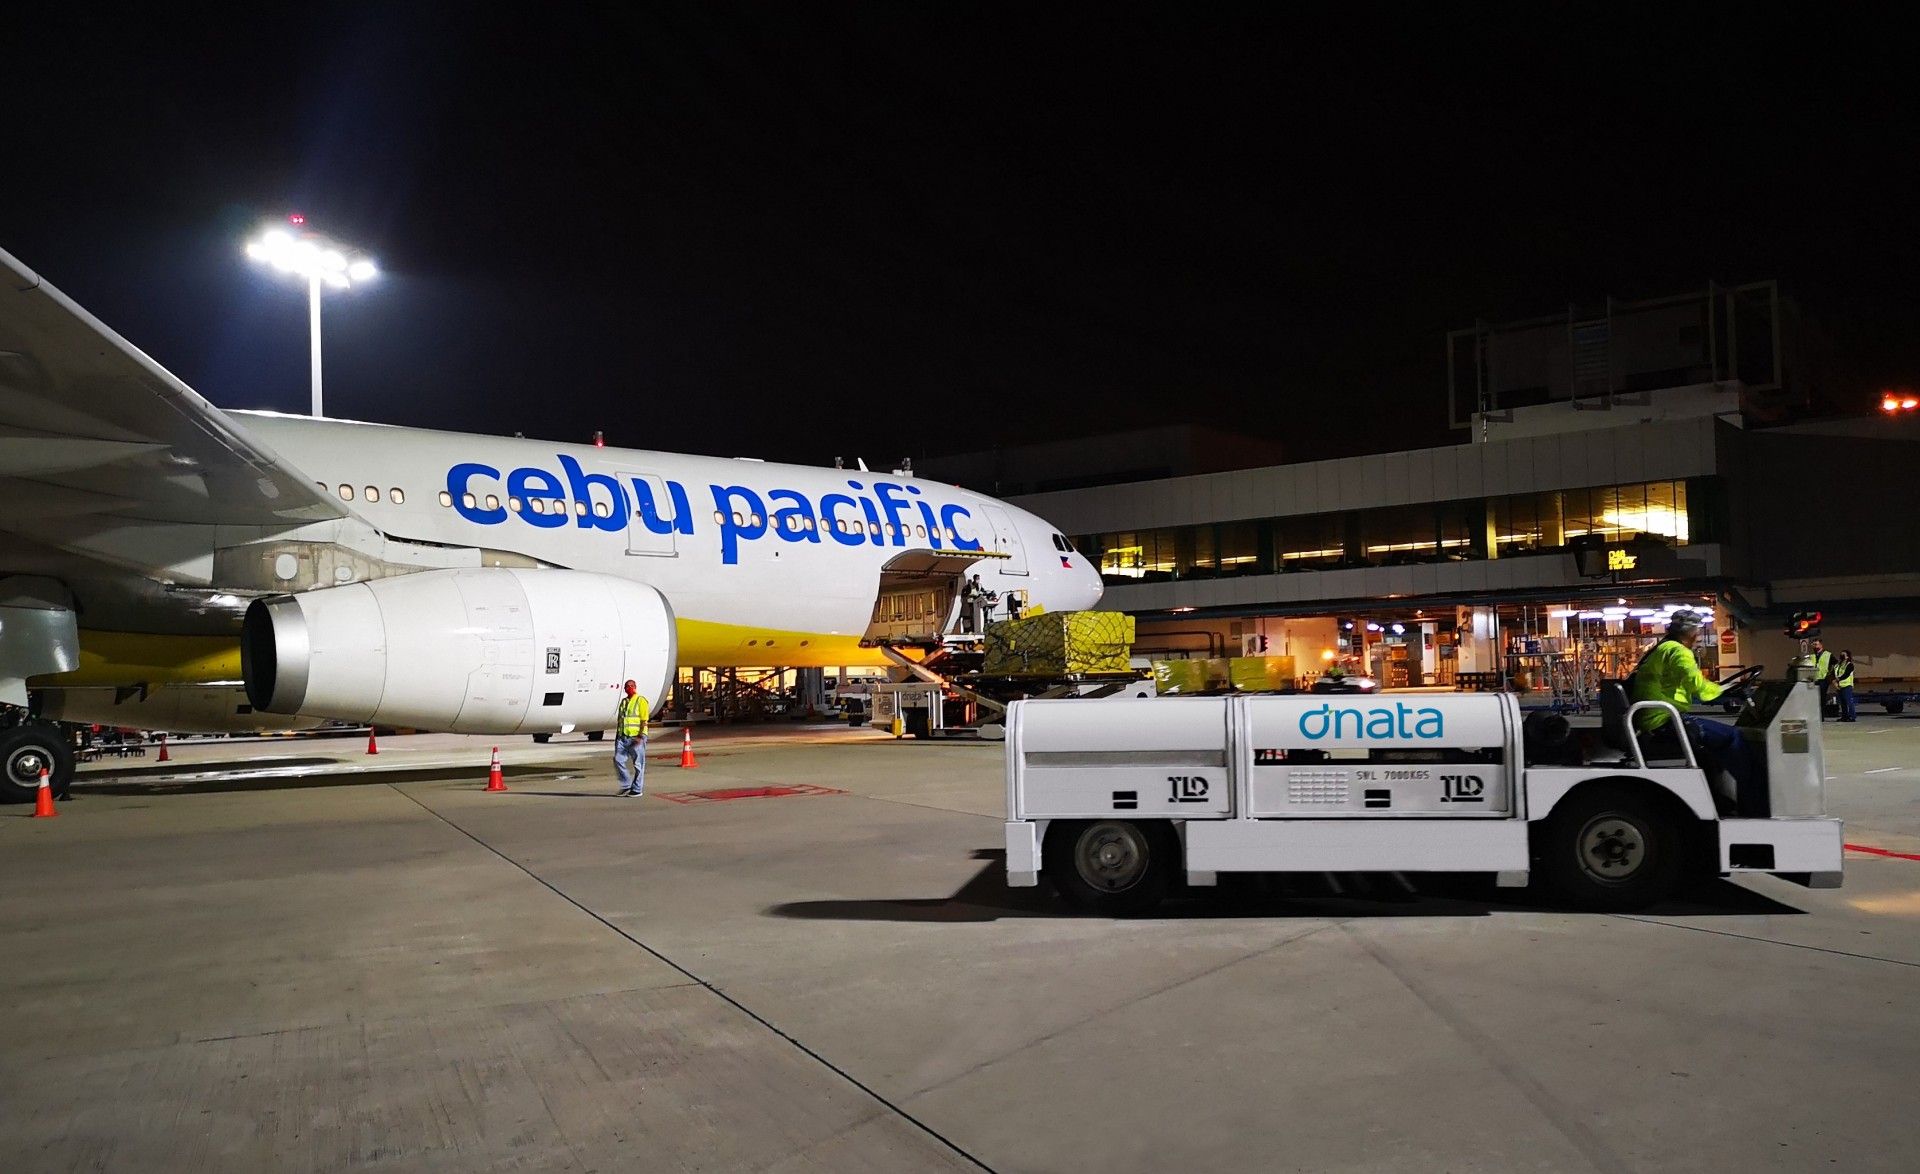 Dnata Ground Handlers Servicing Cebu Pacific Aircraft